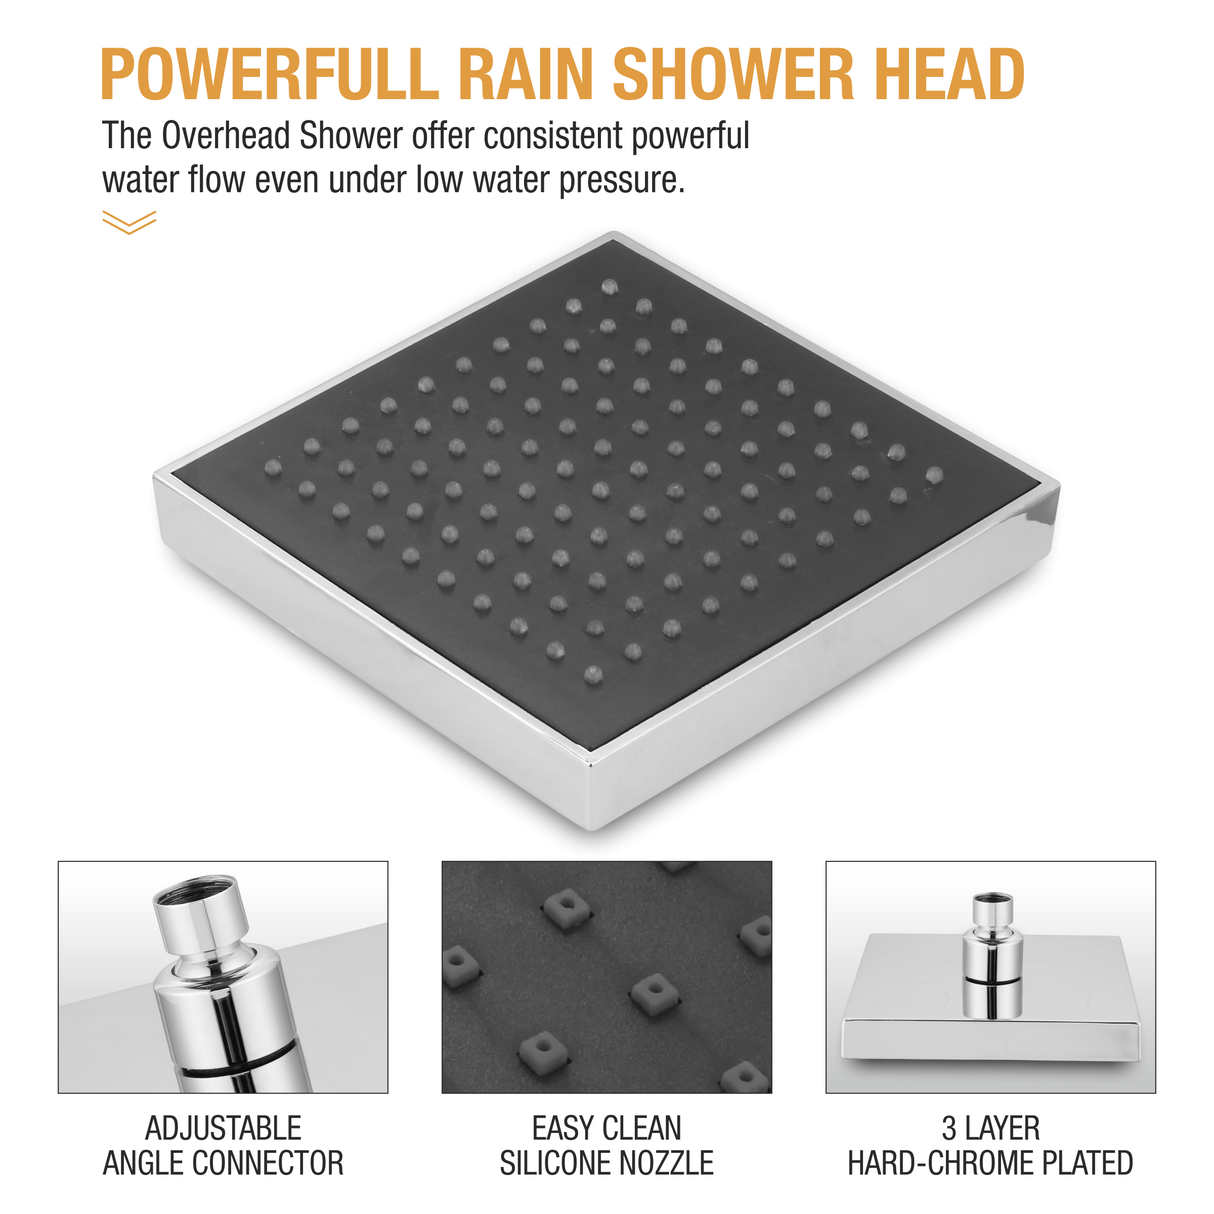 Gamma Overhead Shower (6 x 6 inches) powerfull